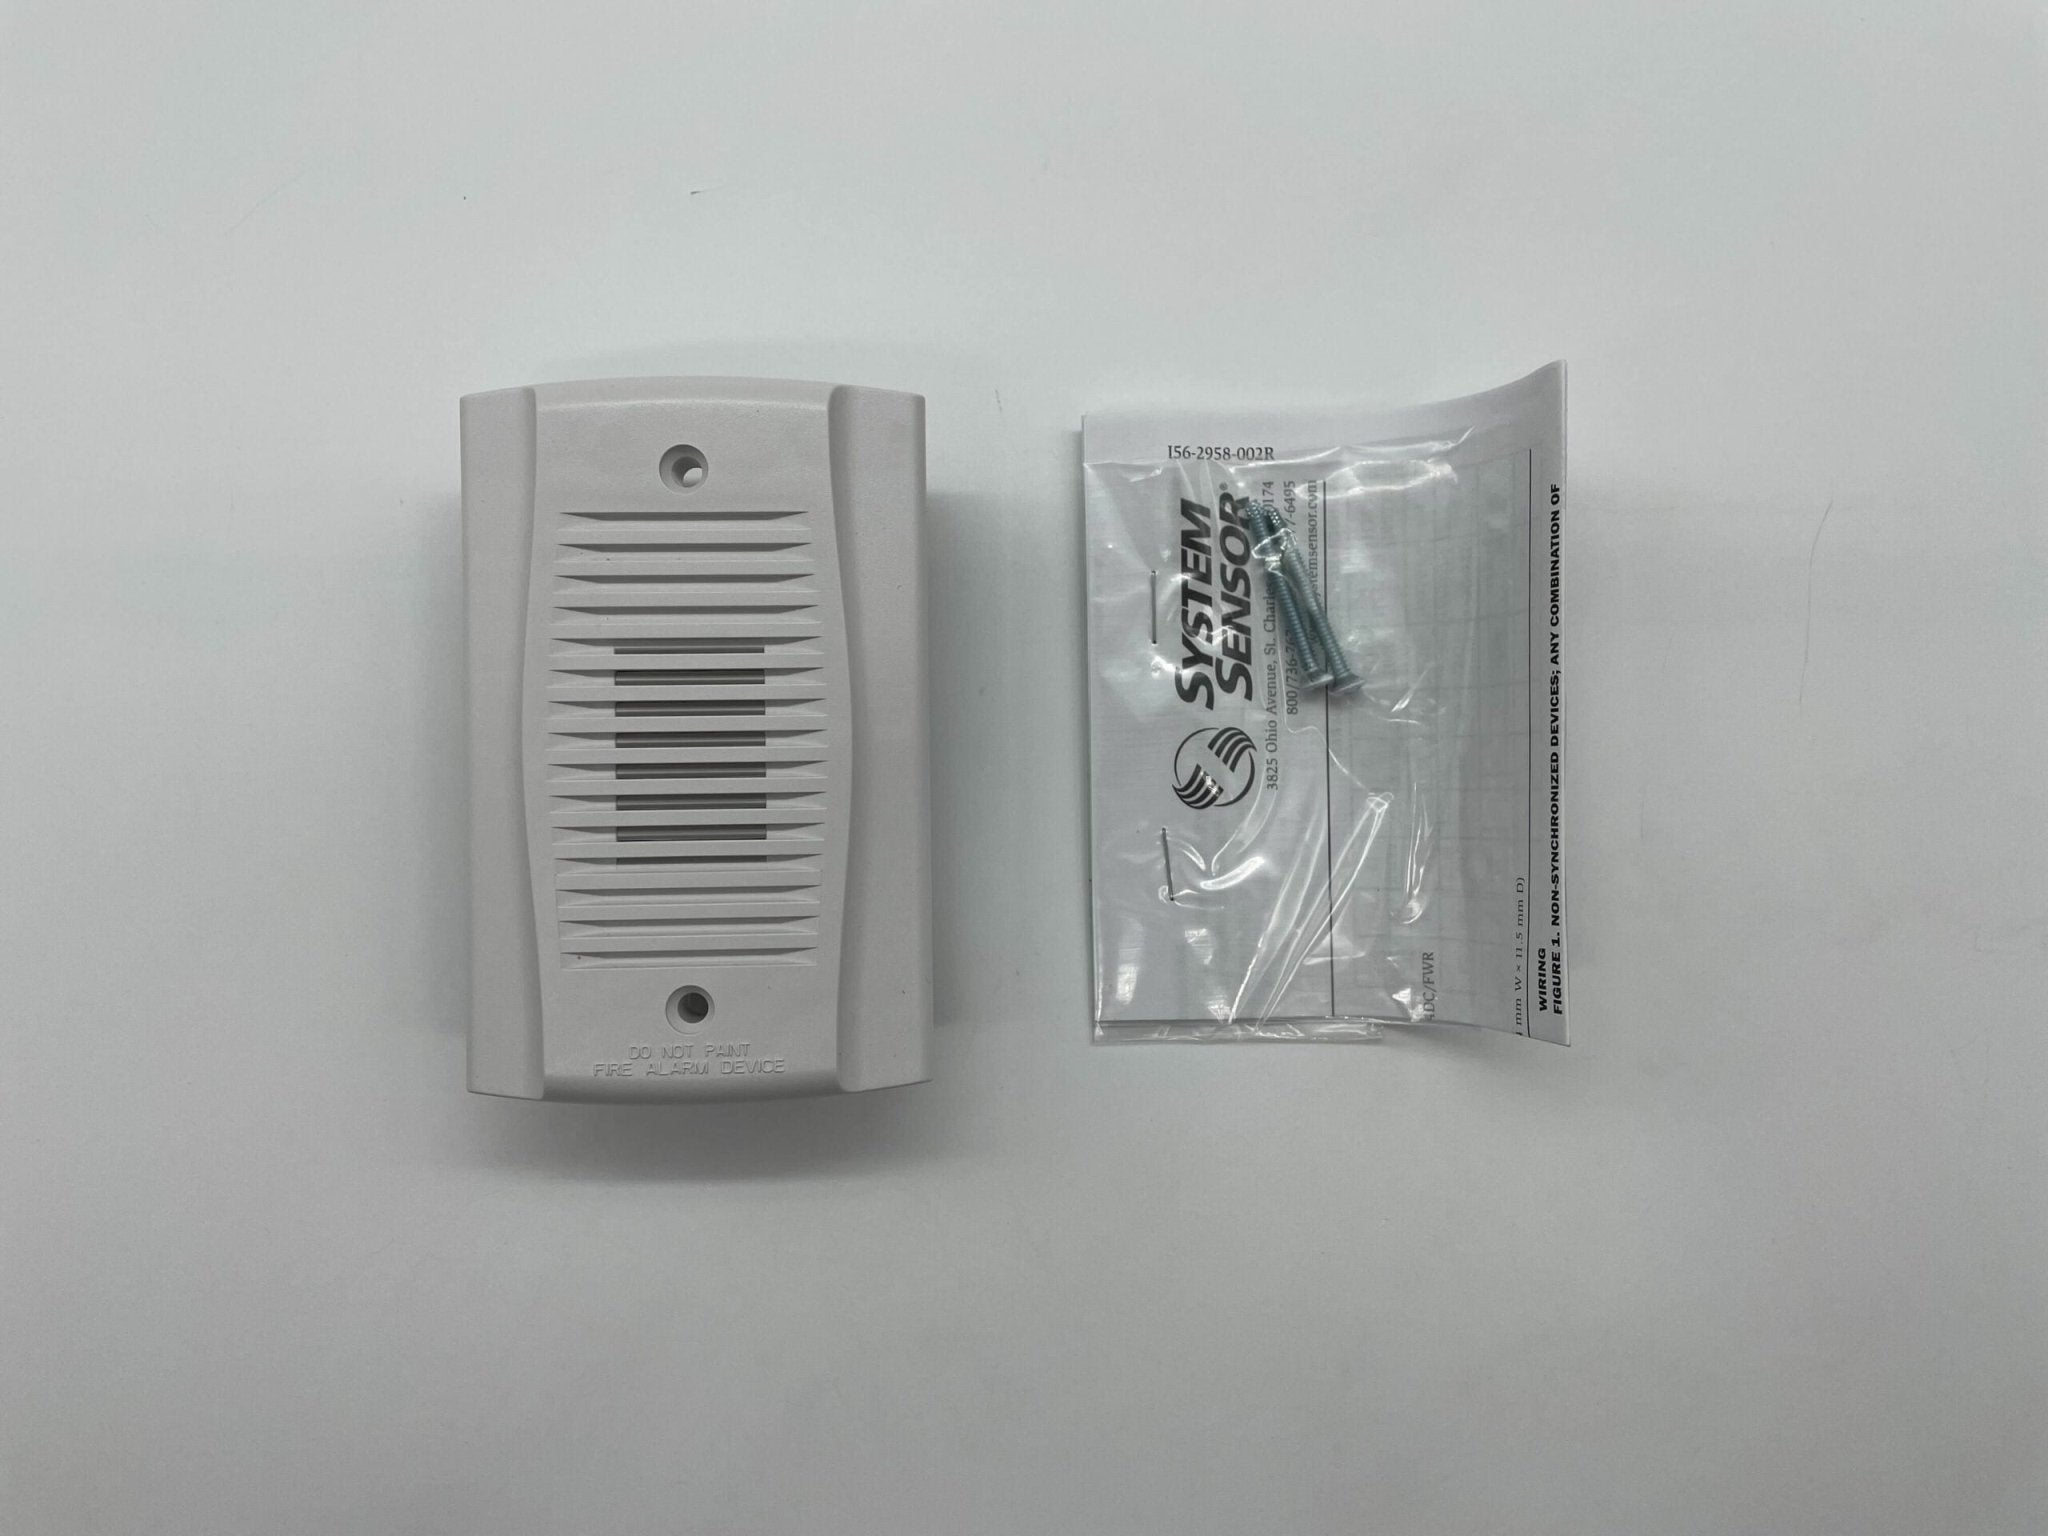 System Sensor MHW - The Fire Alarm Supplier